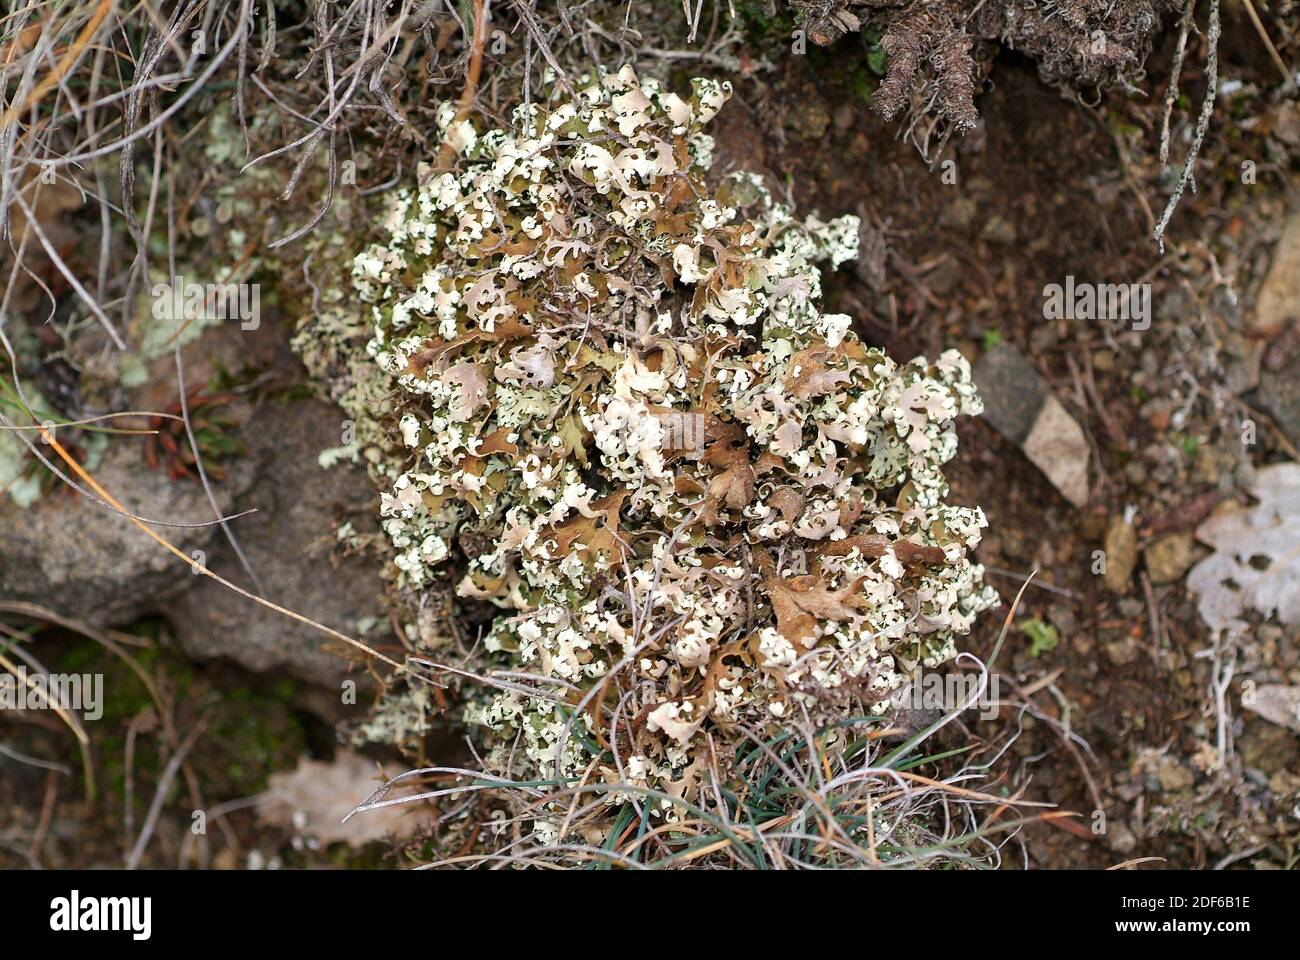 Cladonia convoluta is a lichen with thallus foliose. Fungi. Ascomycota. This photo was taken in La Llacuna, Barcelona, Spain. Stock Photo